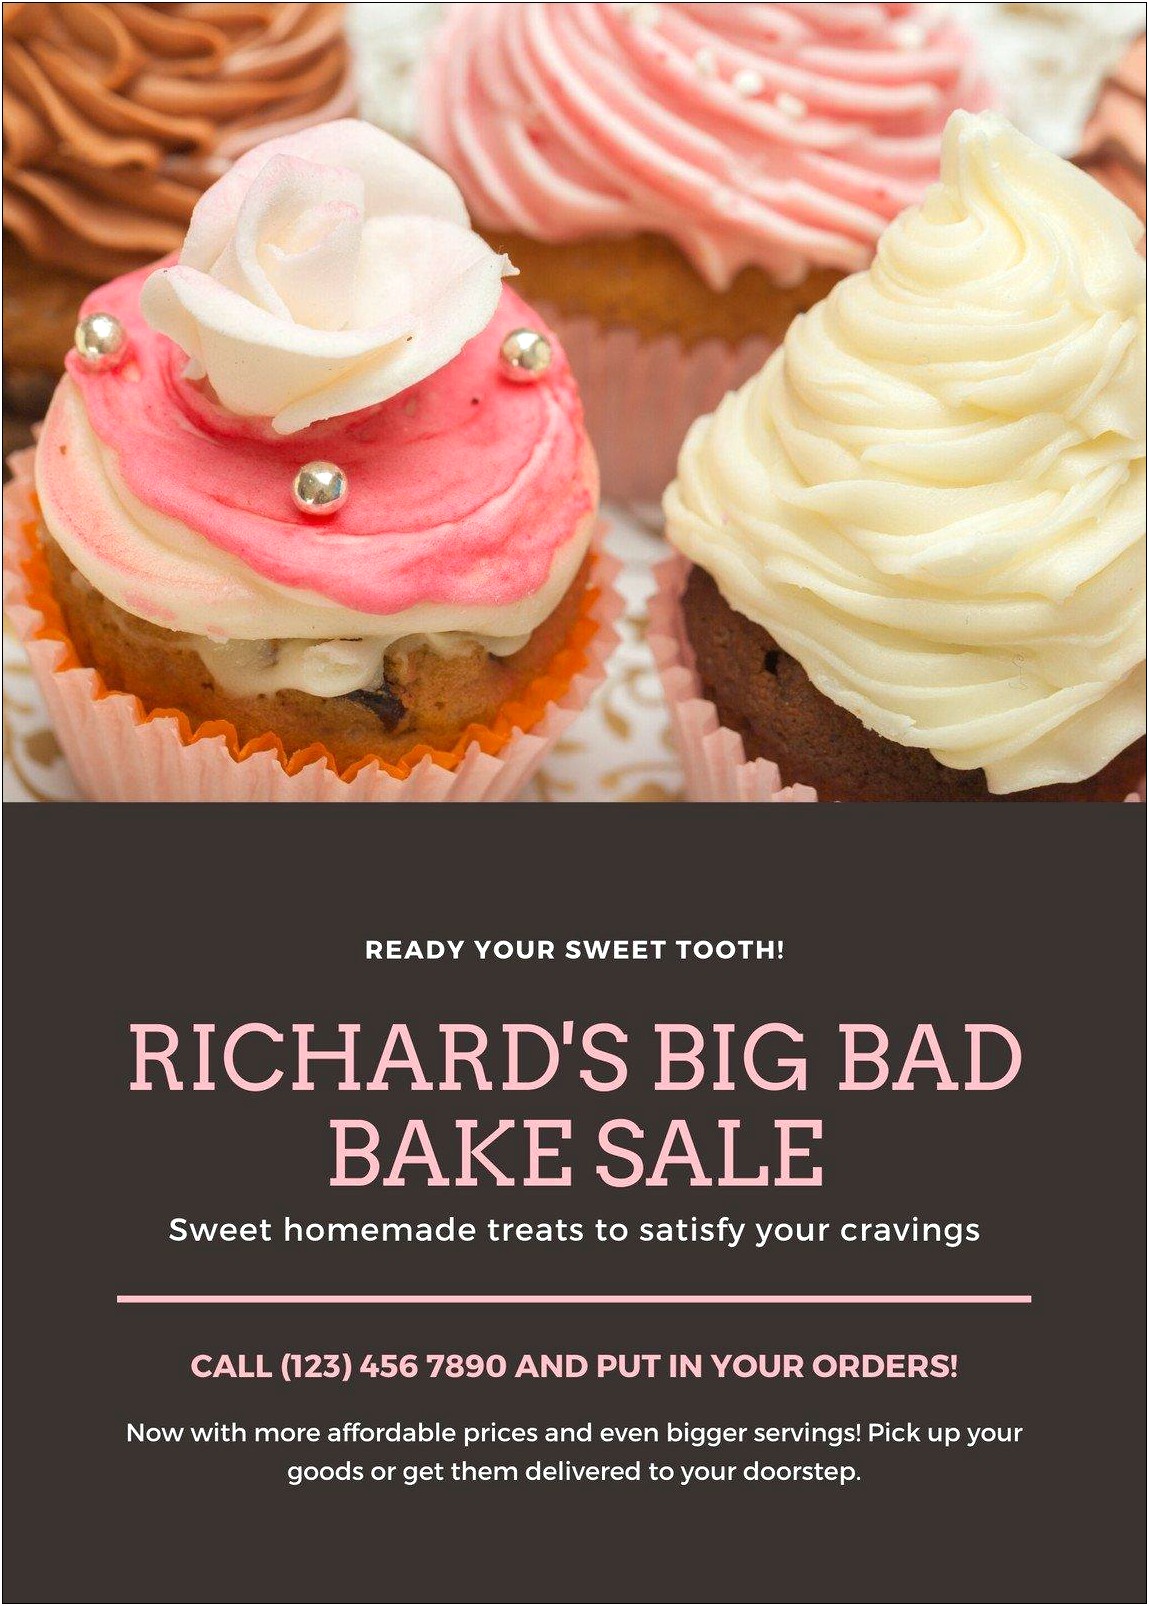 Free Customizable Bake Sale Flyer Template